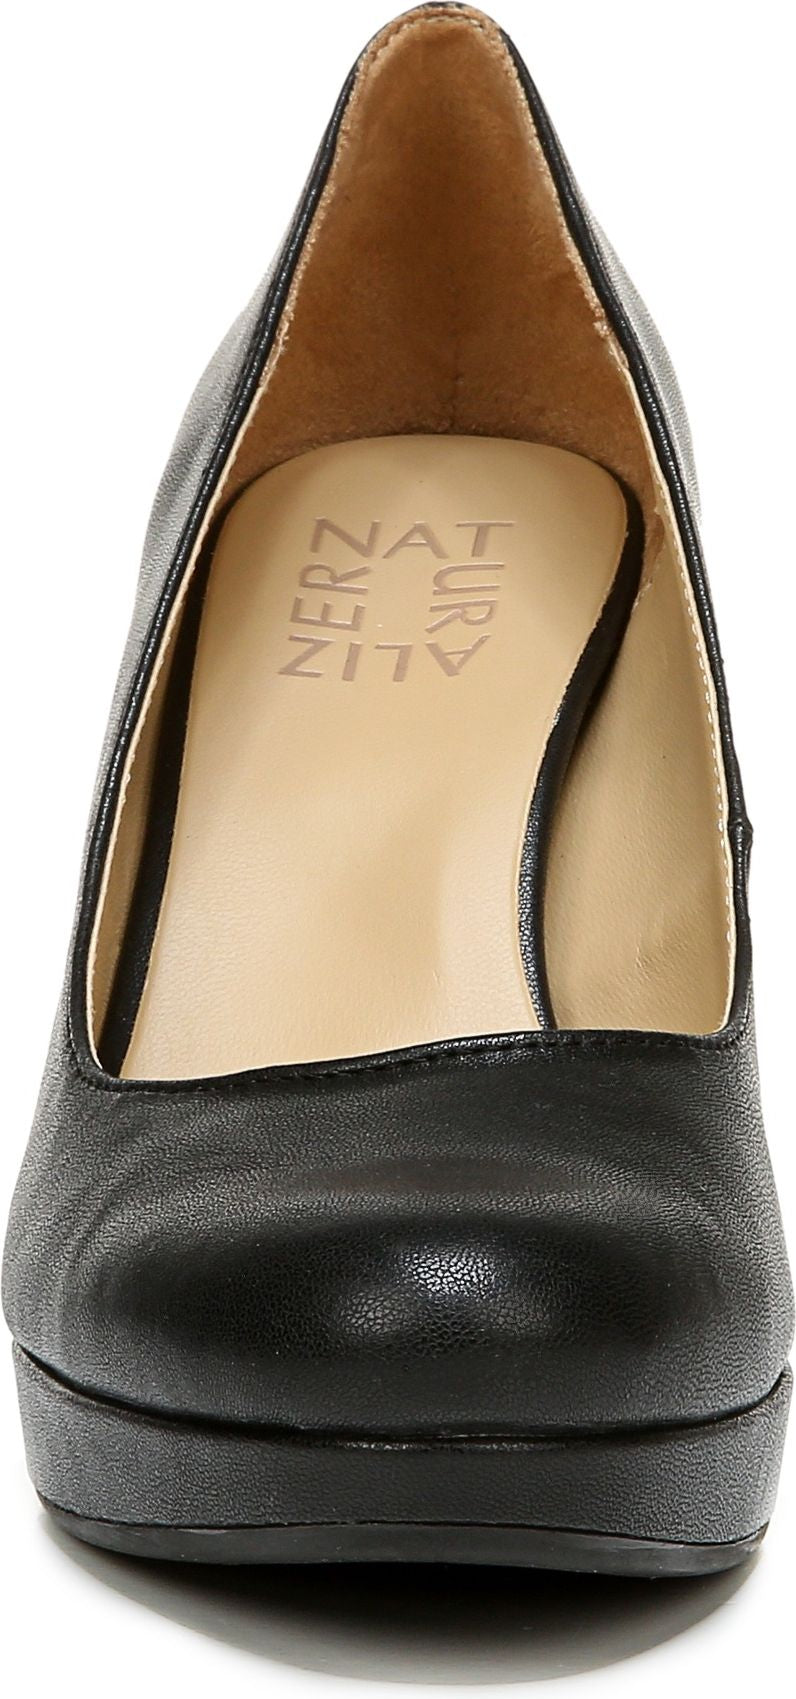 Naturalizer Shoes Berlin Black